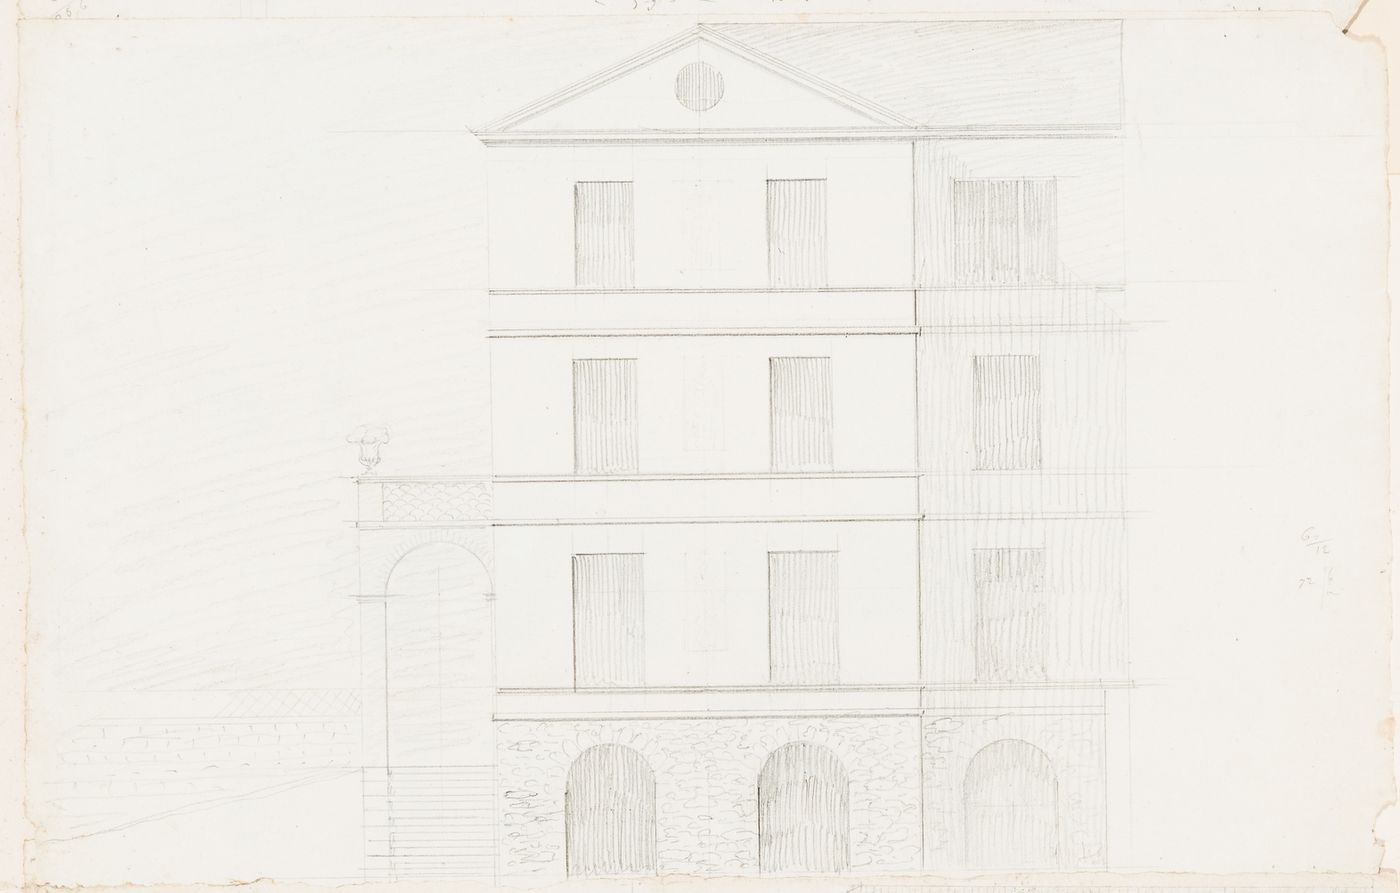 Rohault de Fleury House, 12-14 rue d'Aguesseau, Paris: Elevation for the principal façade; verso: Unidentified sketches